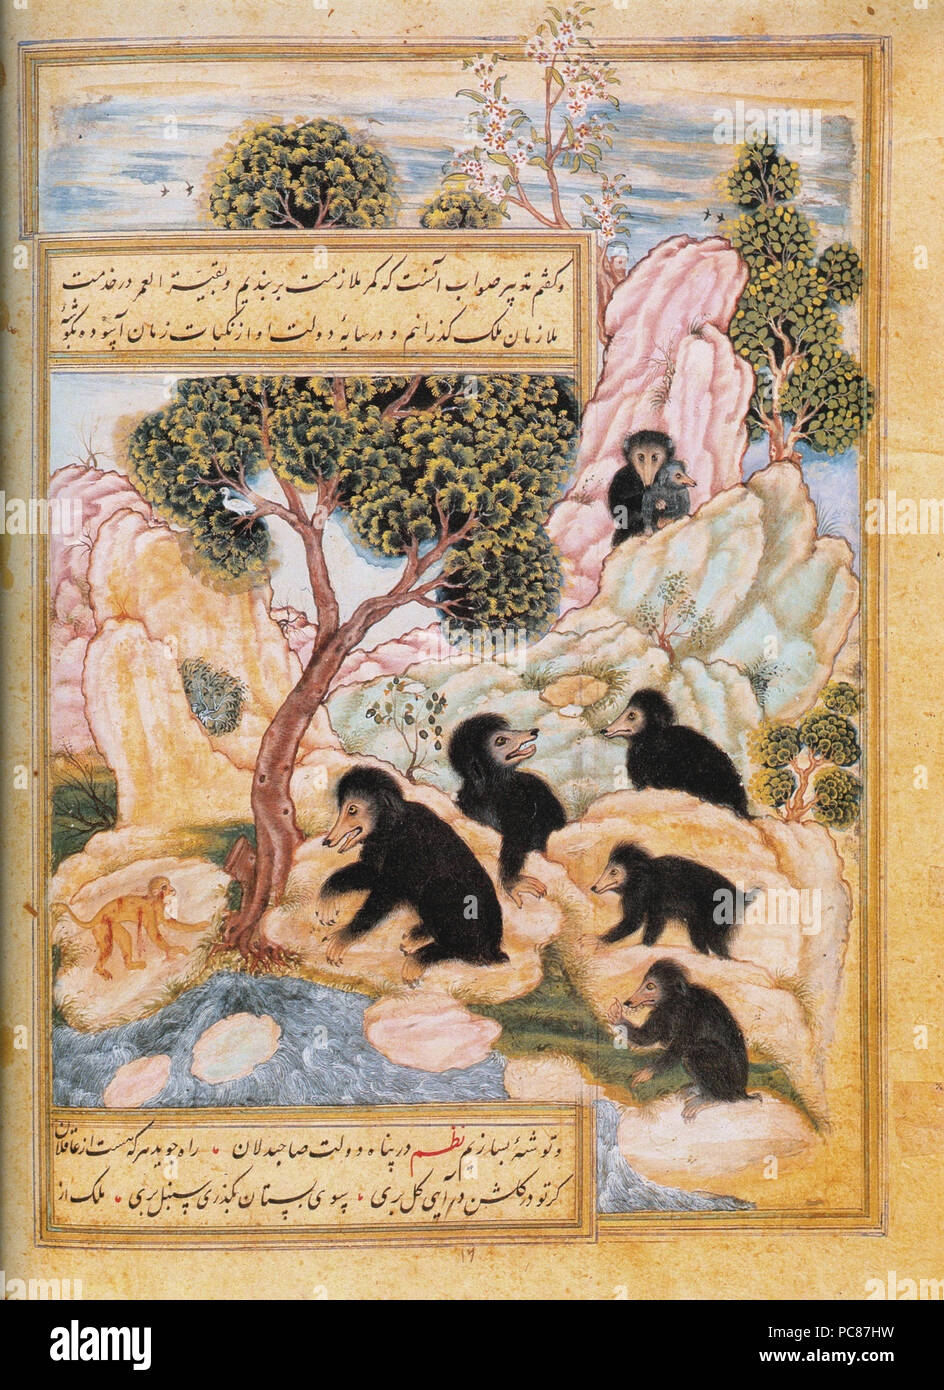 388 Maimun, la scimmia patriottica, esche orsi tj il loro destino. Anvar-i Suhaili da Husain Wa'iz Kashifi. 1570-71School of Oriental and African Studies, Lond Foto Stock